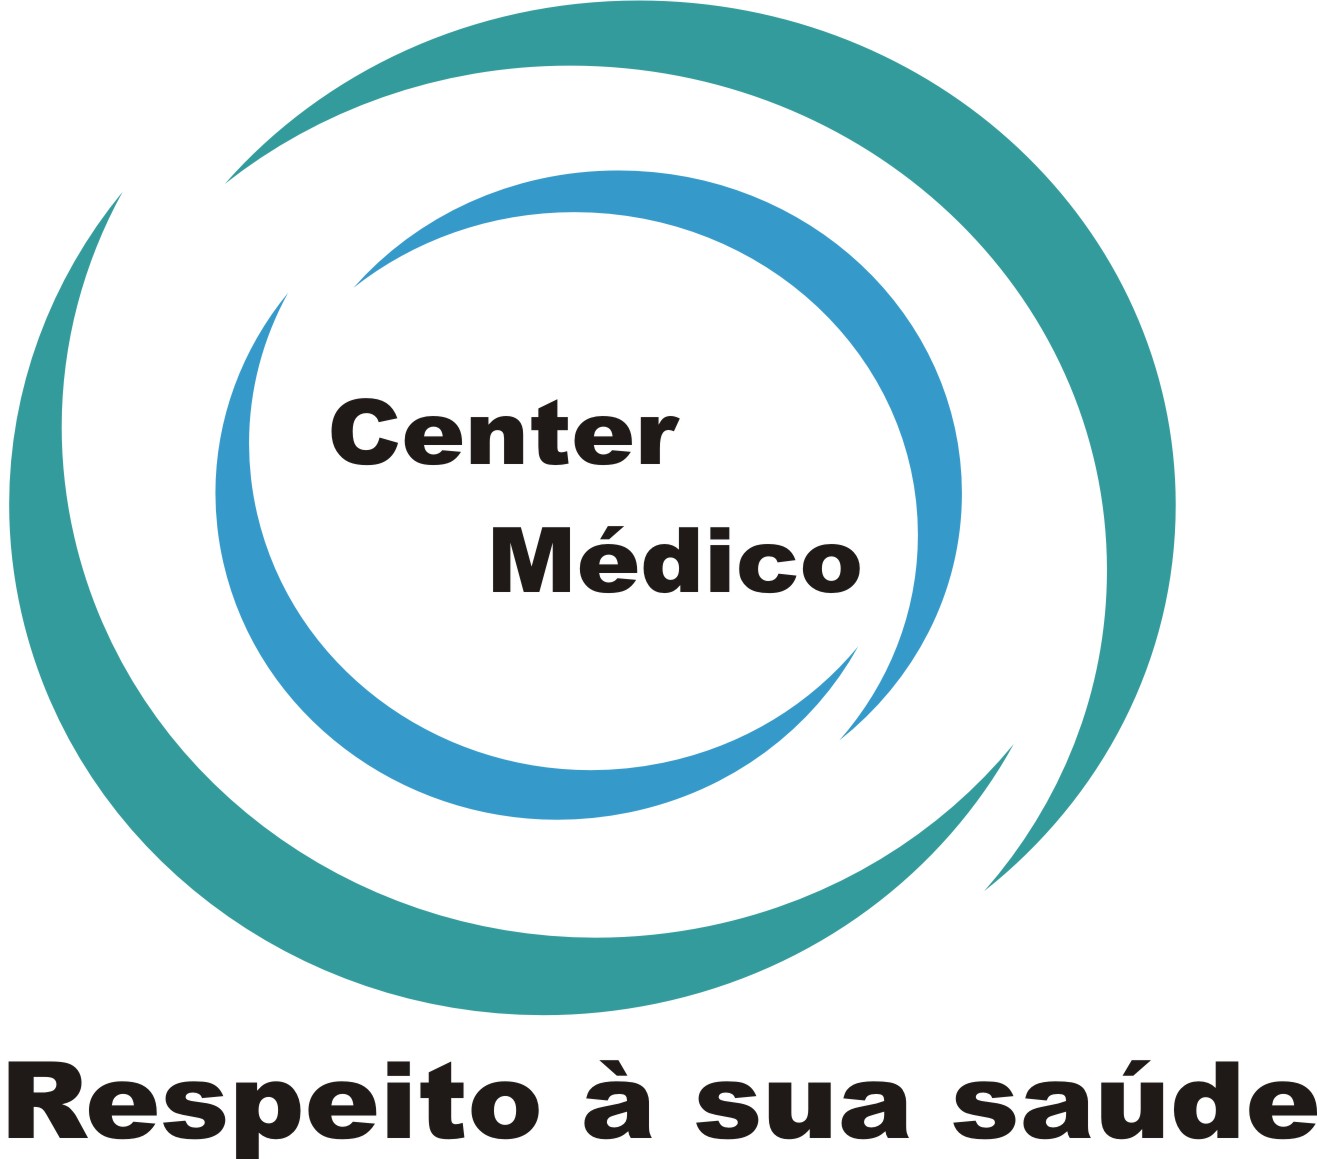 CenterMedico